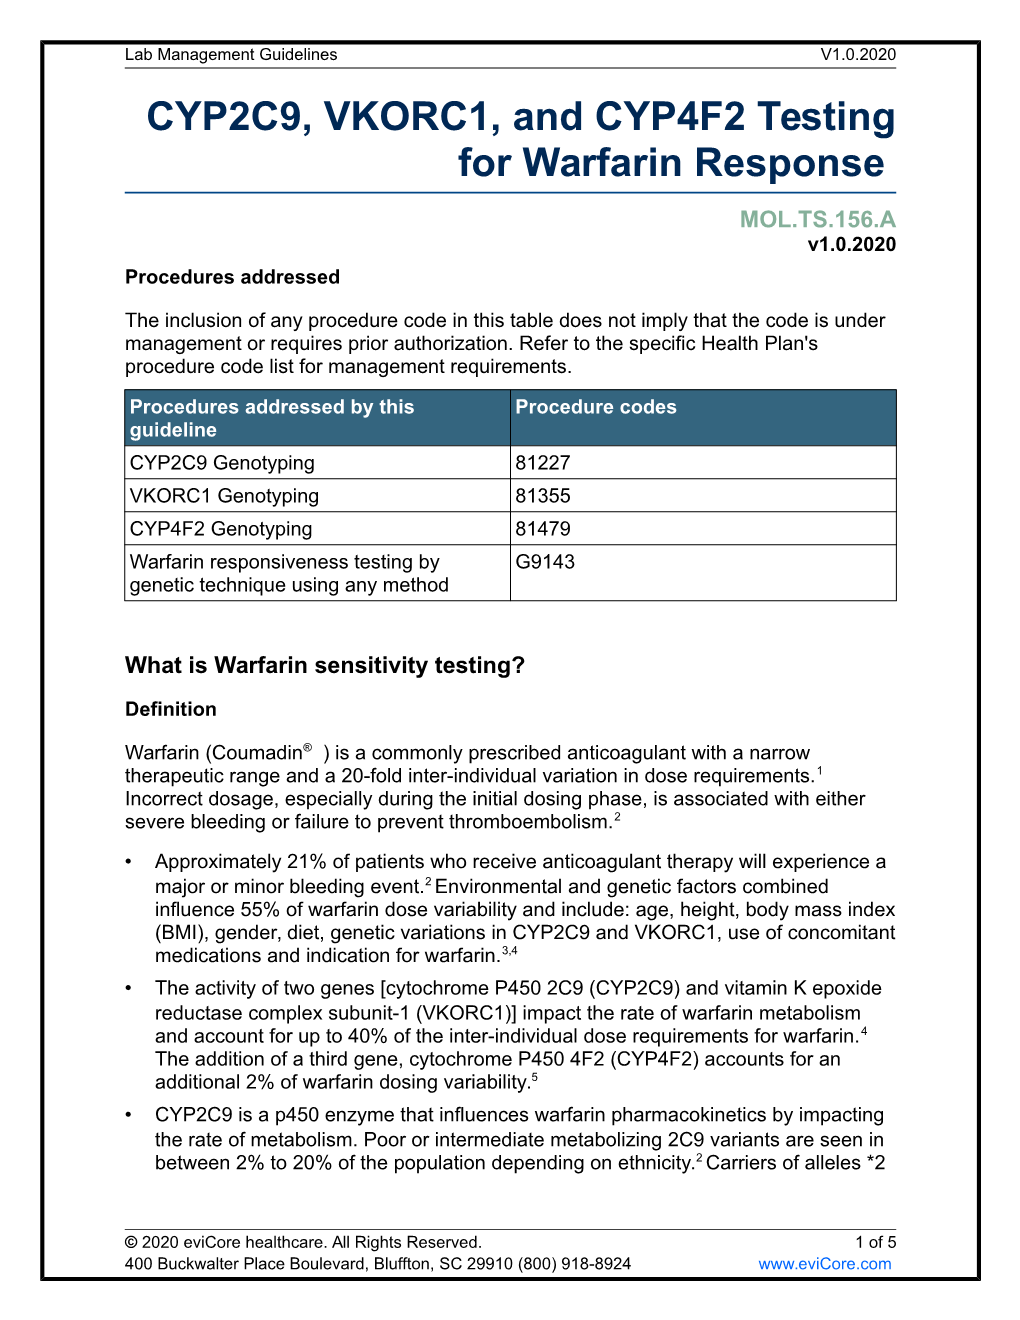 CYP2C9 and VKORC1 Testing for Warfarin Response